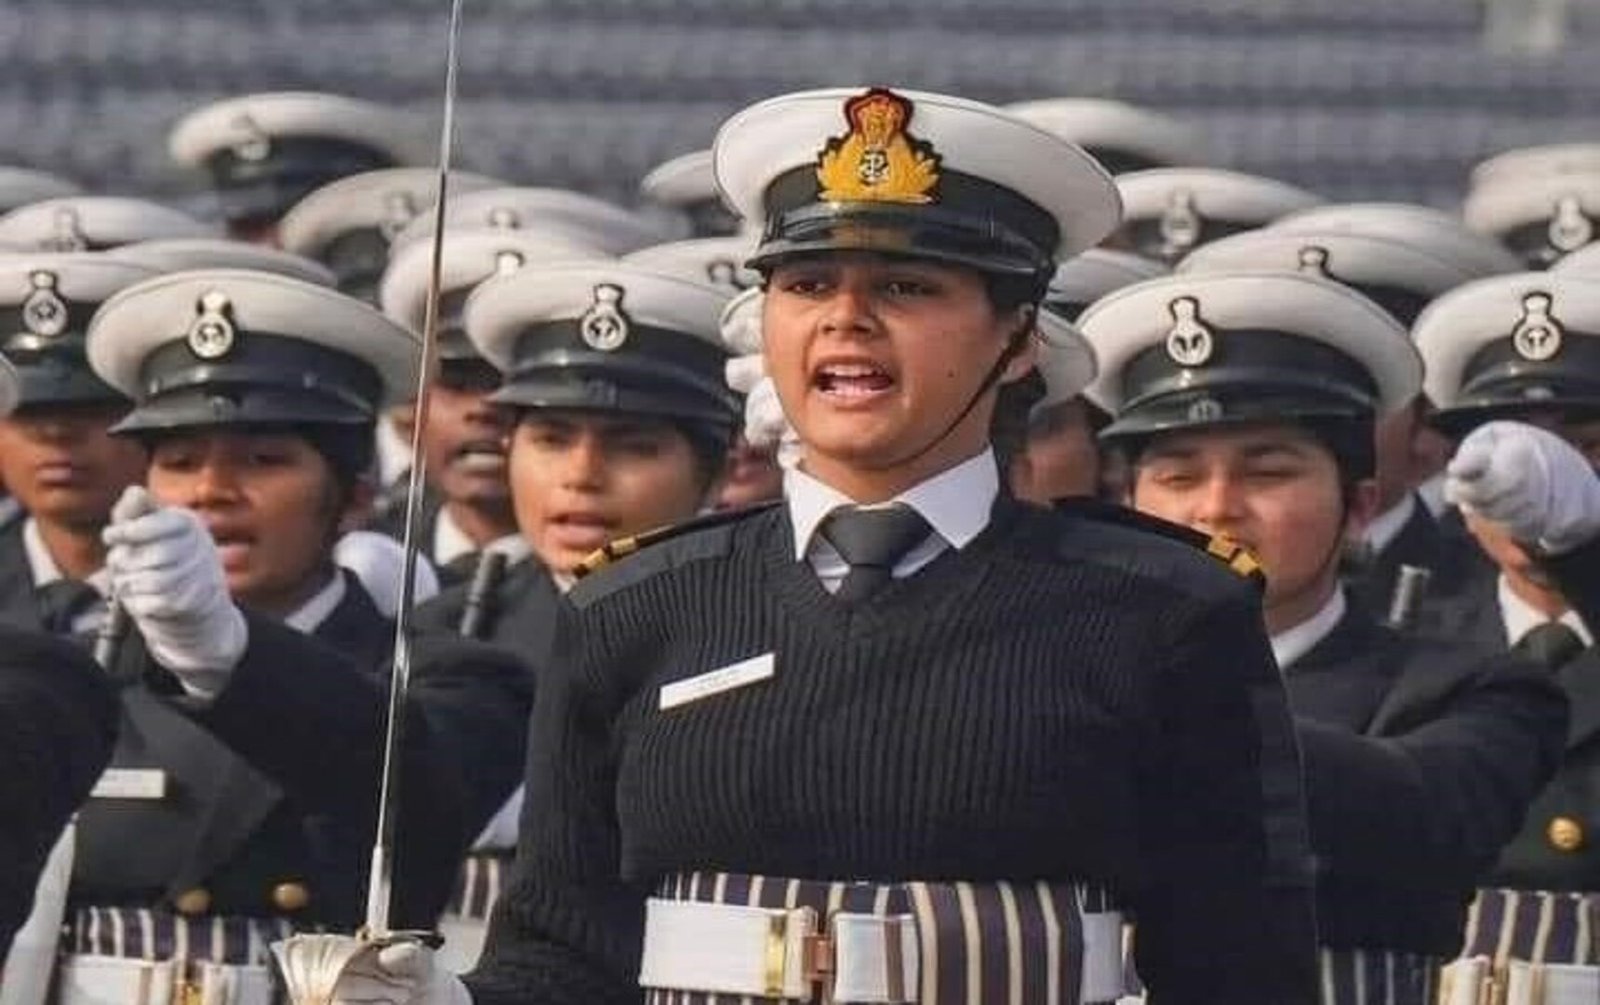 Navy's parade was led by Devika Namboothiri